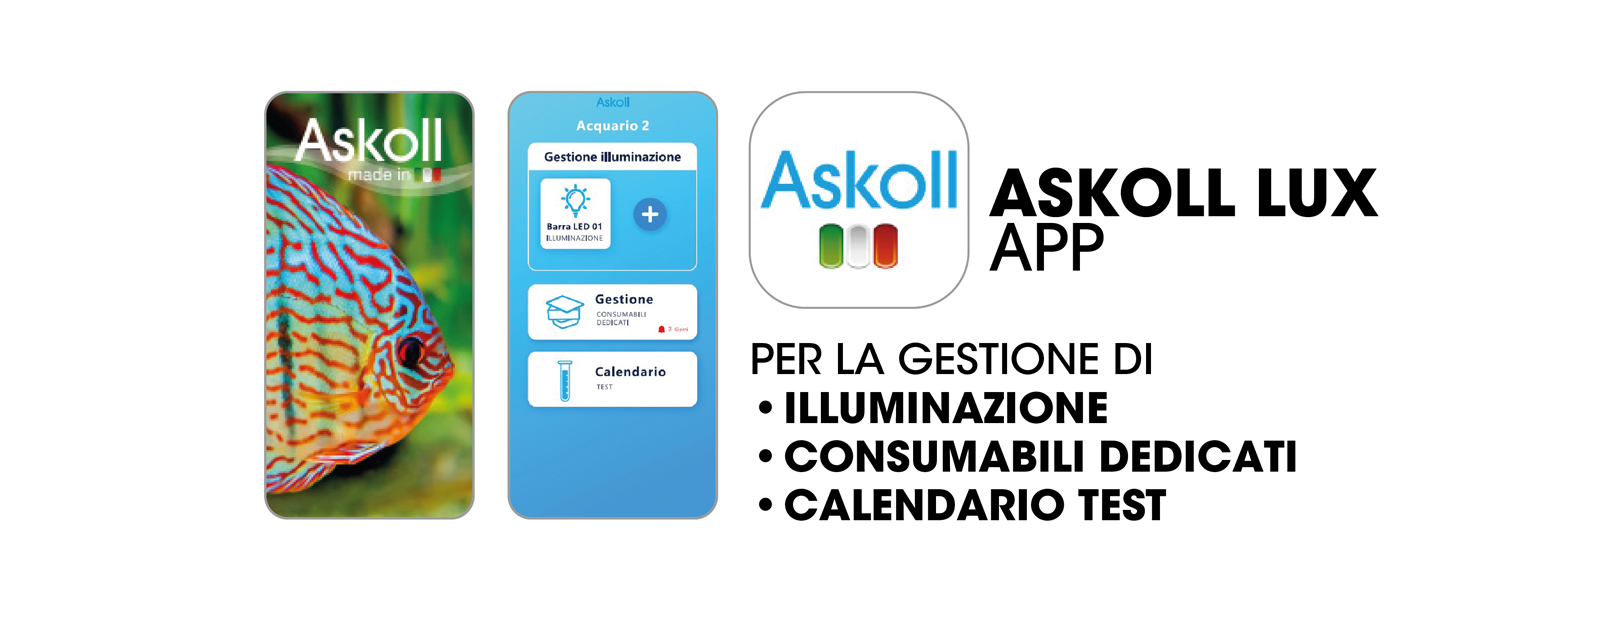 Scopri la nuova Askoll LUX App